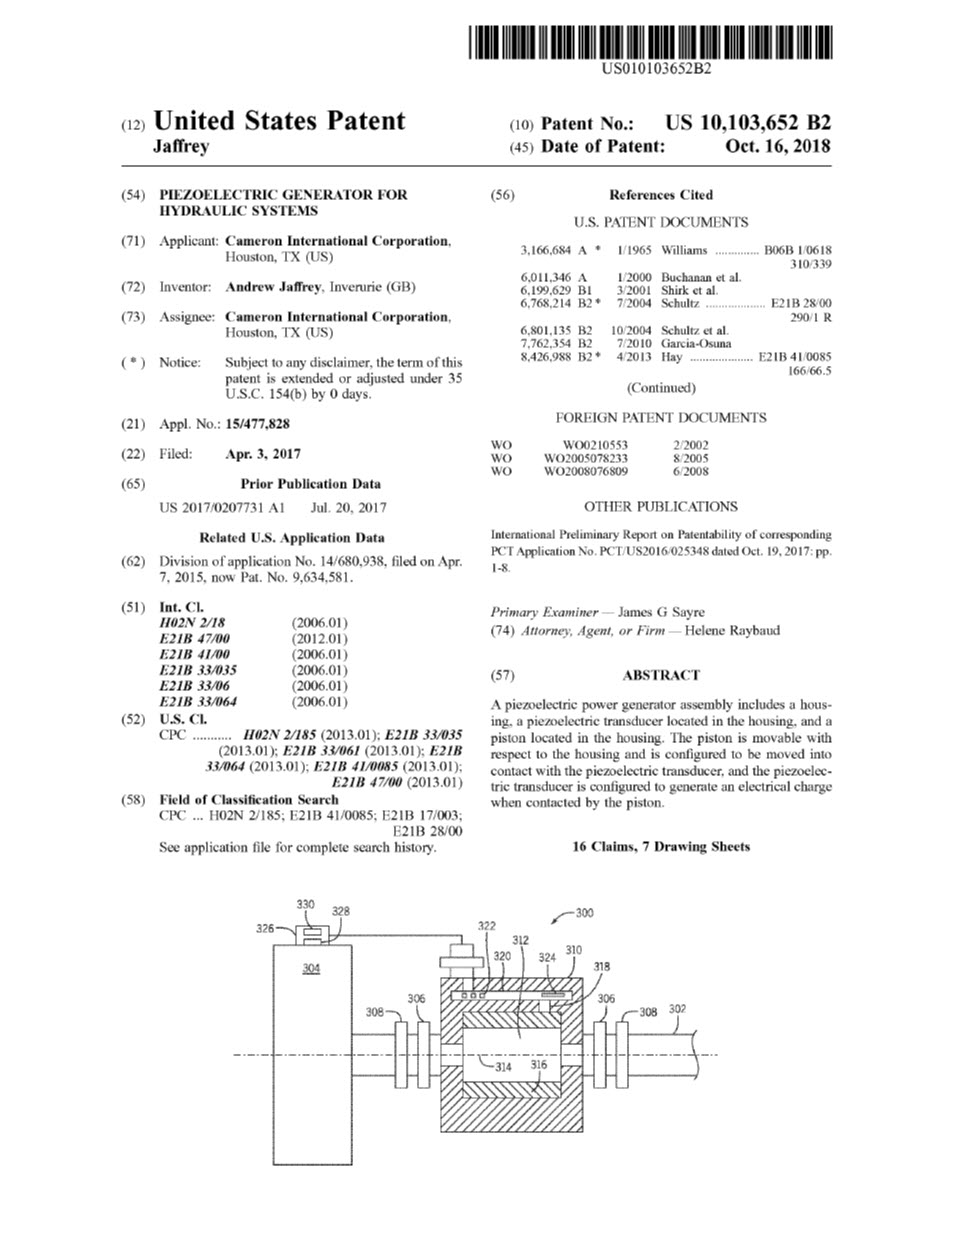 Download PDF file of patent